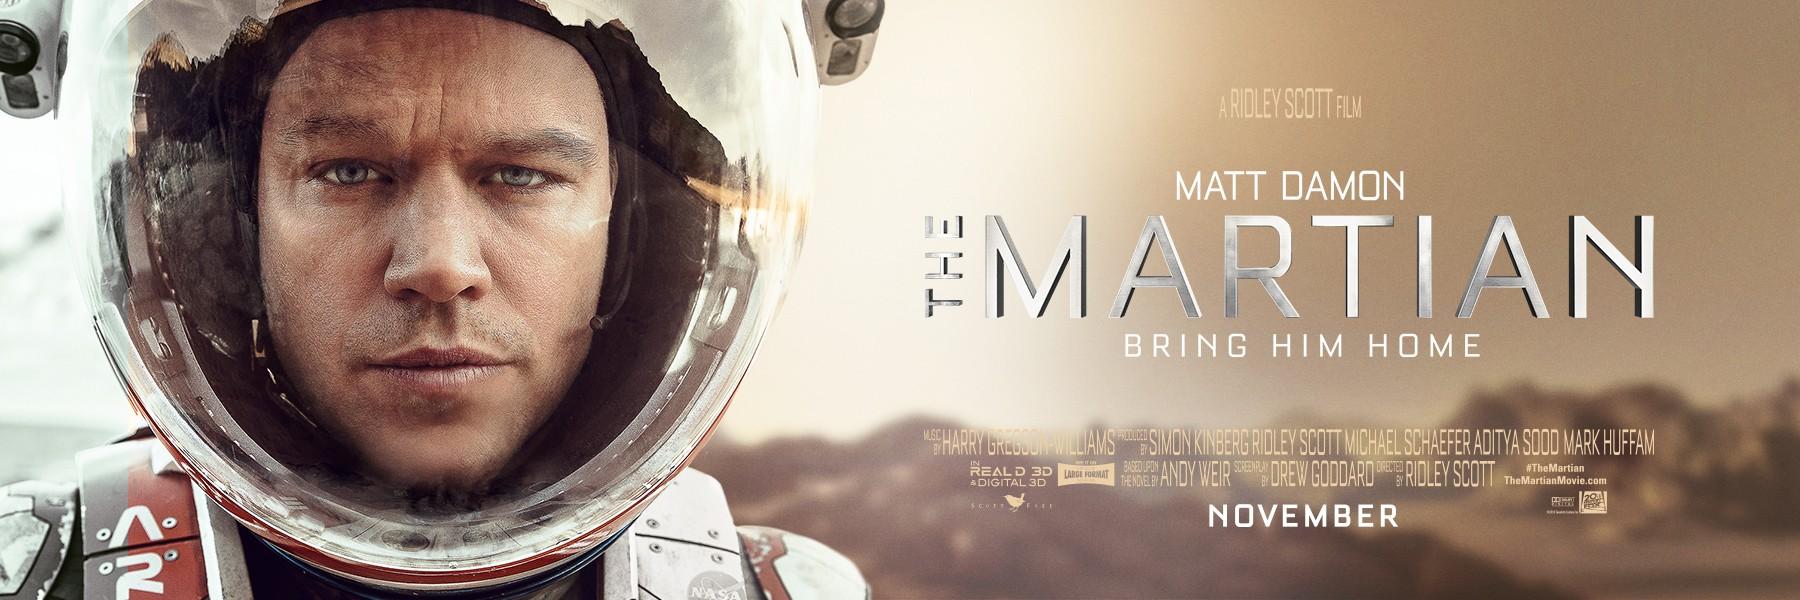 Постер фильма Марсианин | Martian